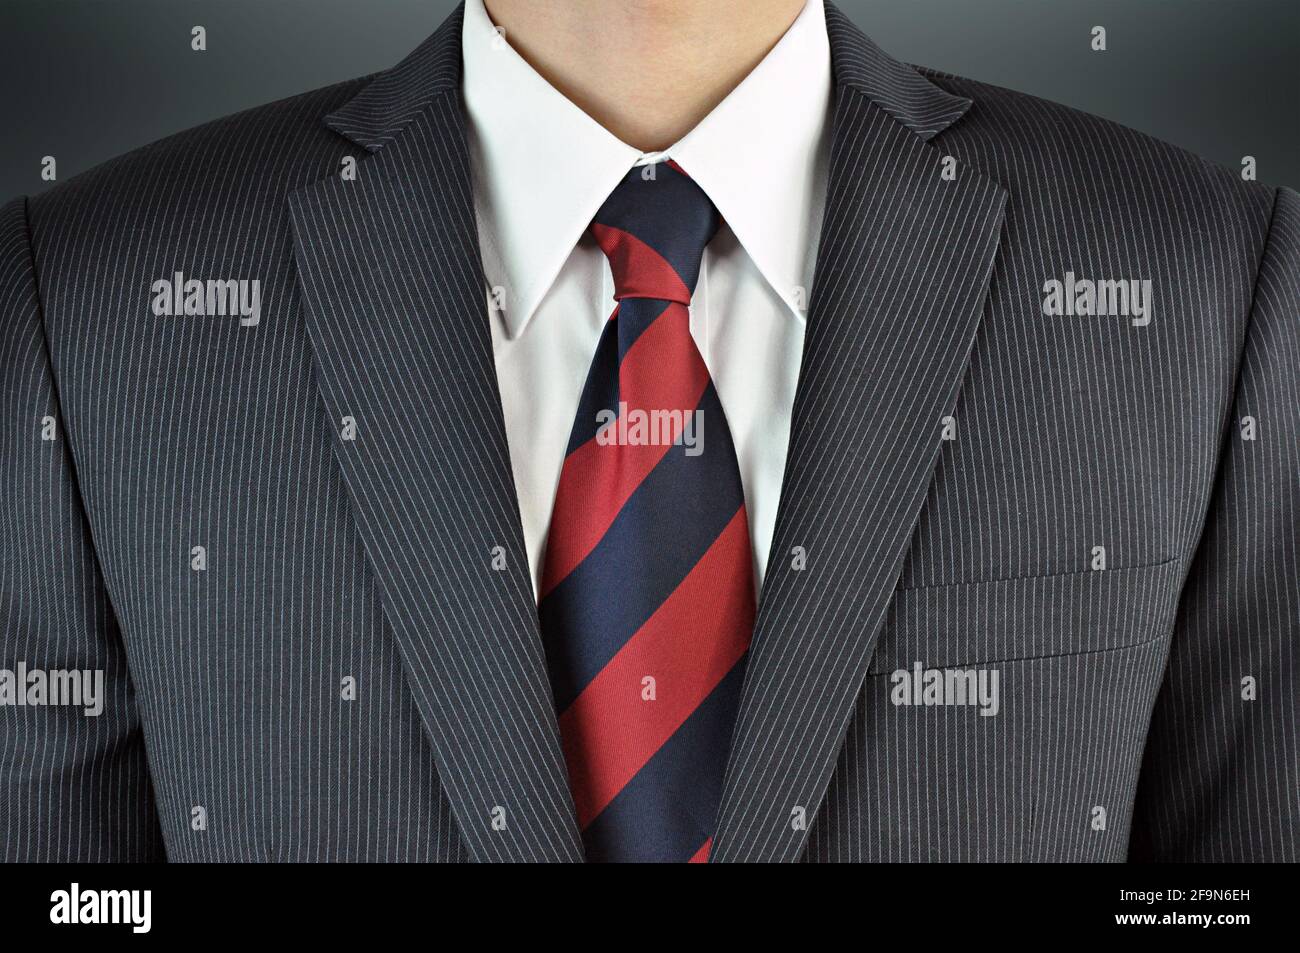 A man wearing suit with stripe necktie - business attire Stock Photo